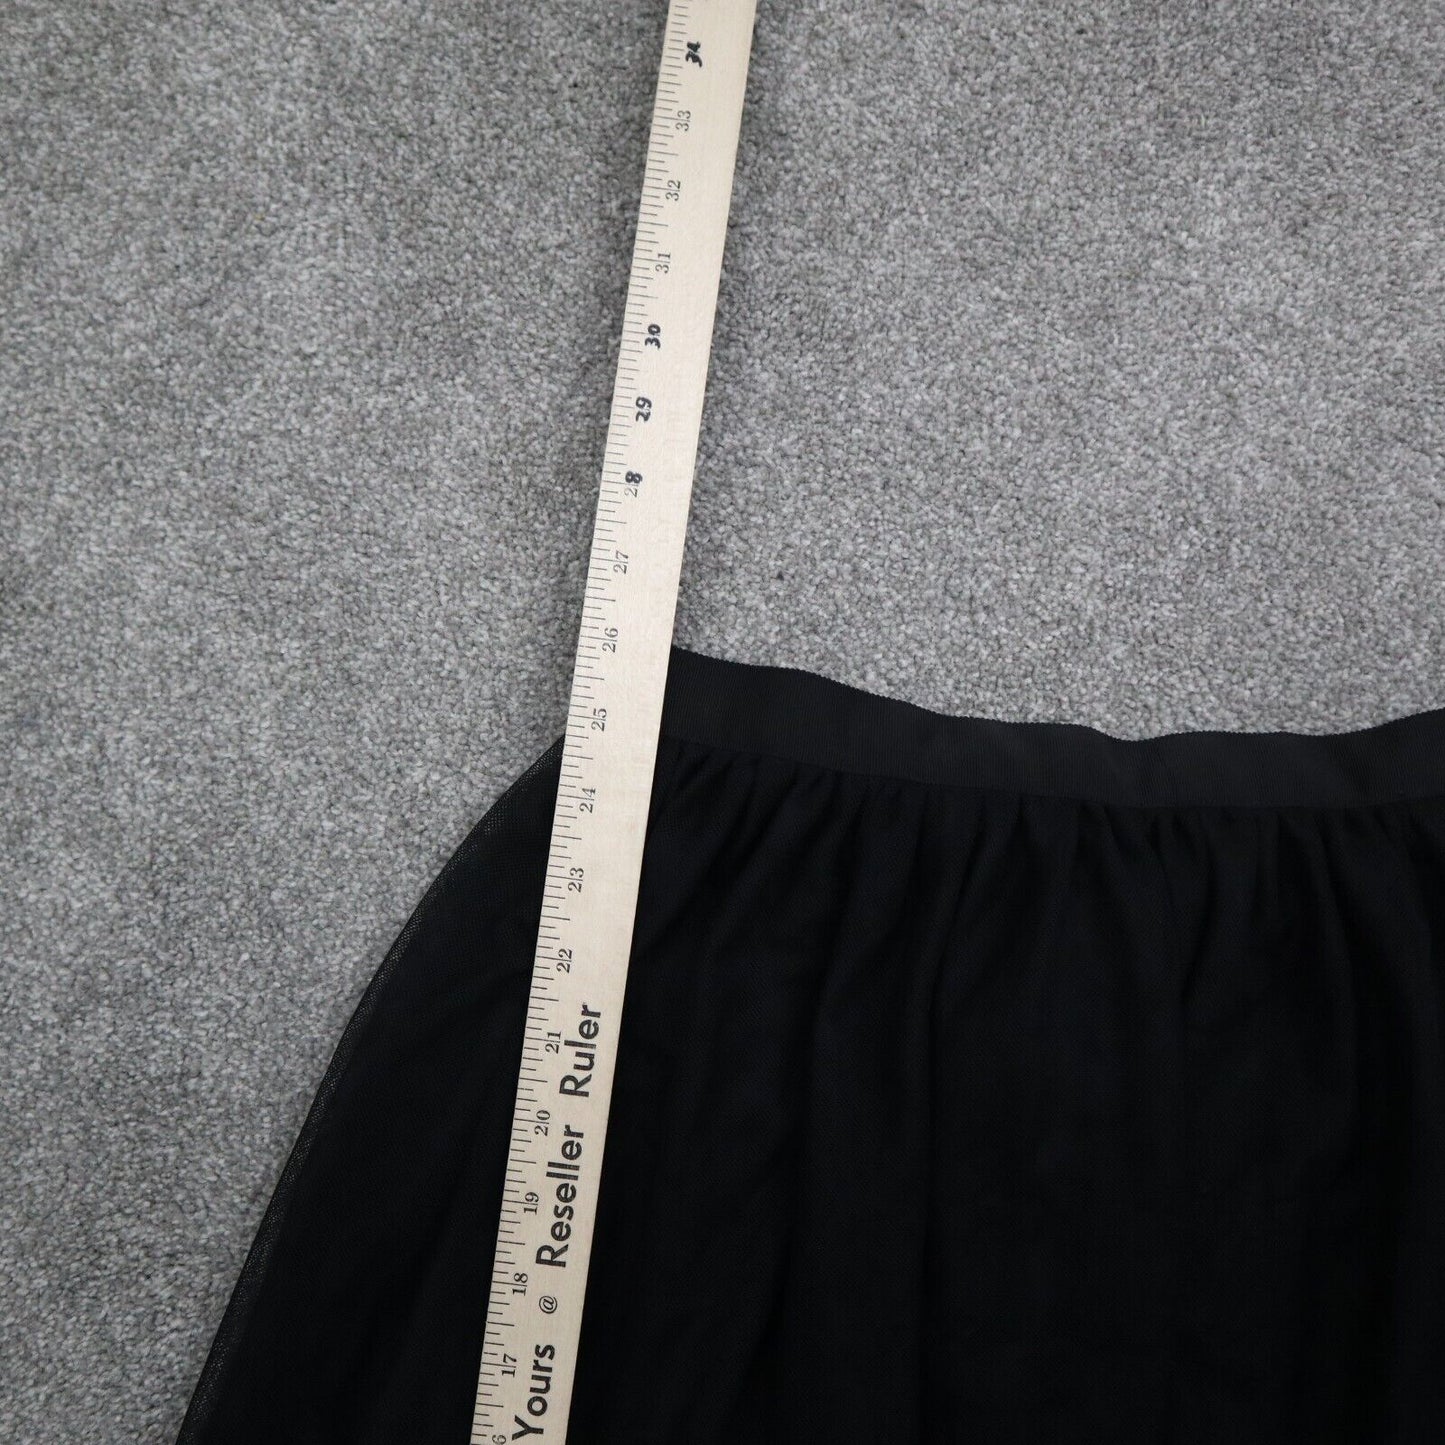 H&M Basic Womens Pleated A Line Midi Skirt Elastic Waist Black Size 4